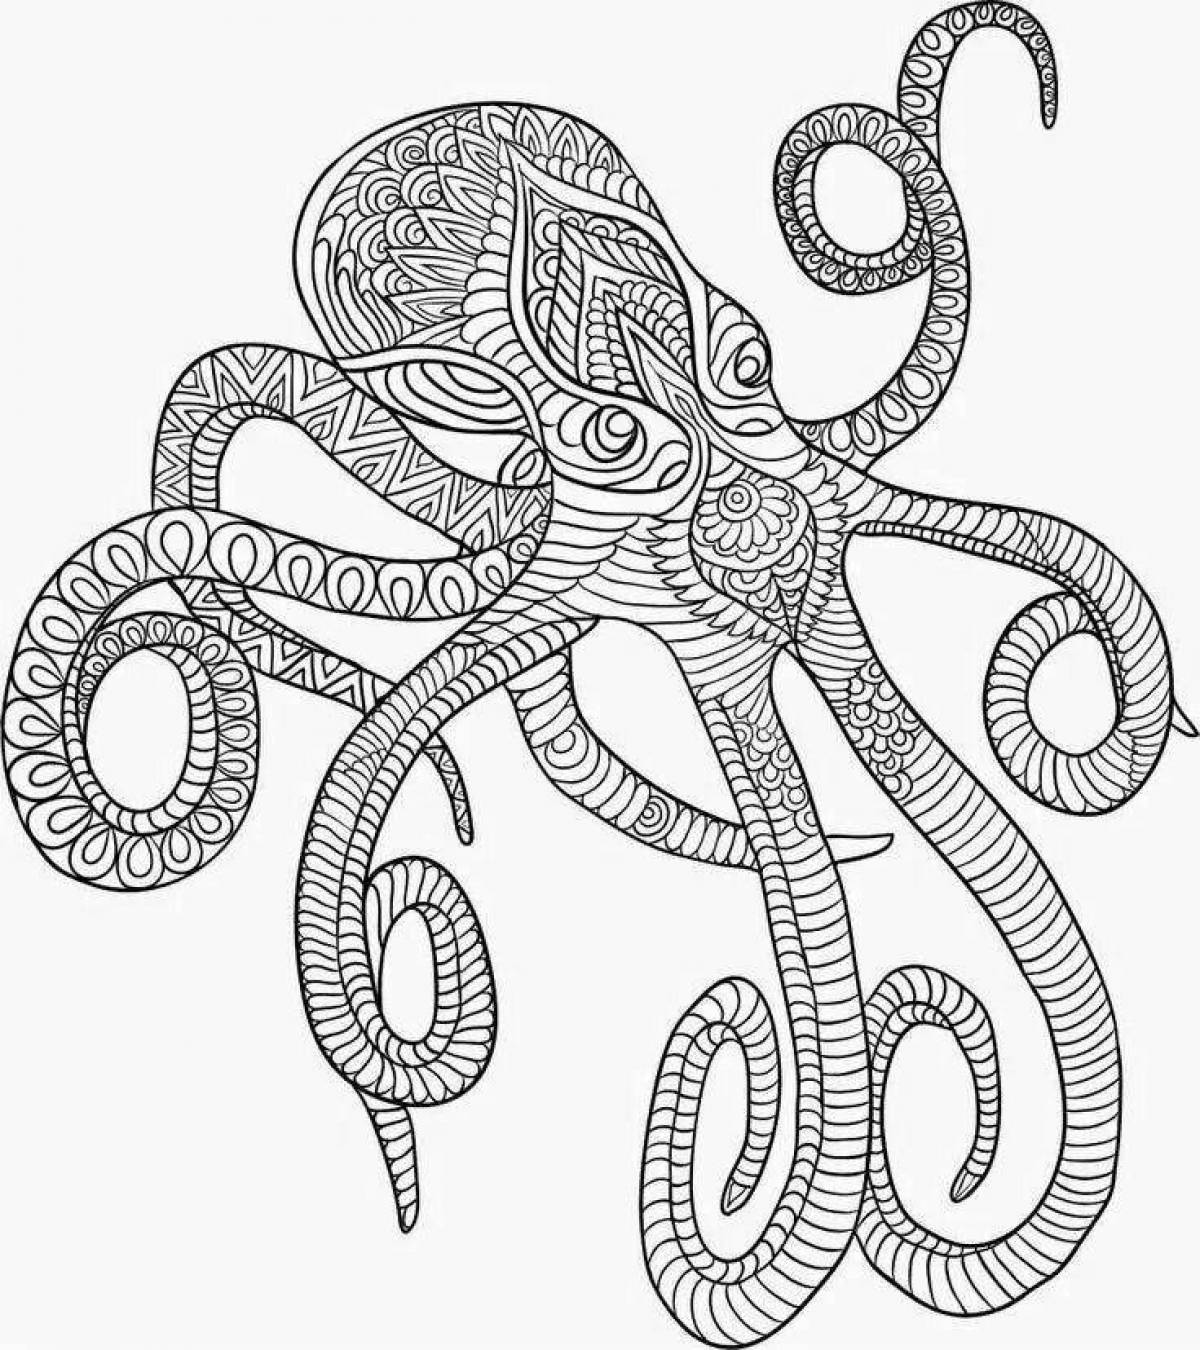 Fancy octopus coloring book